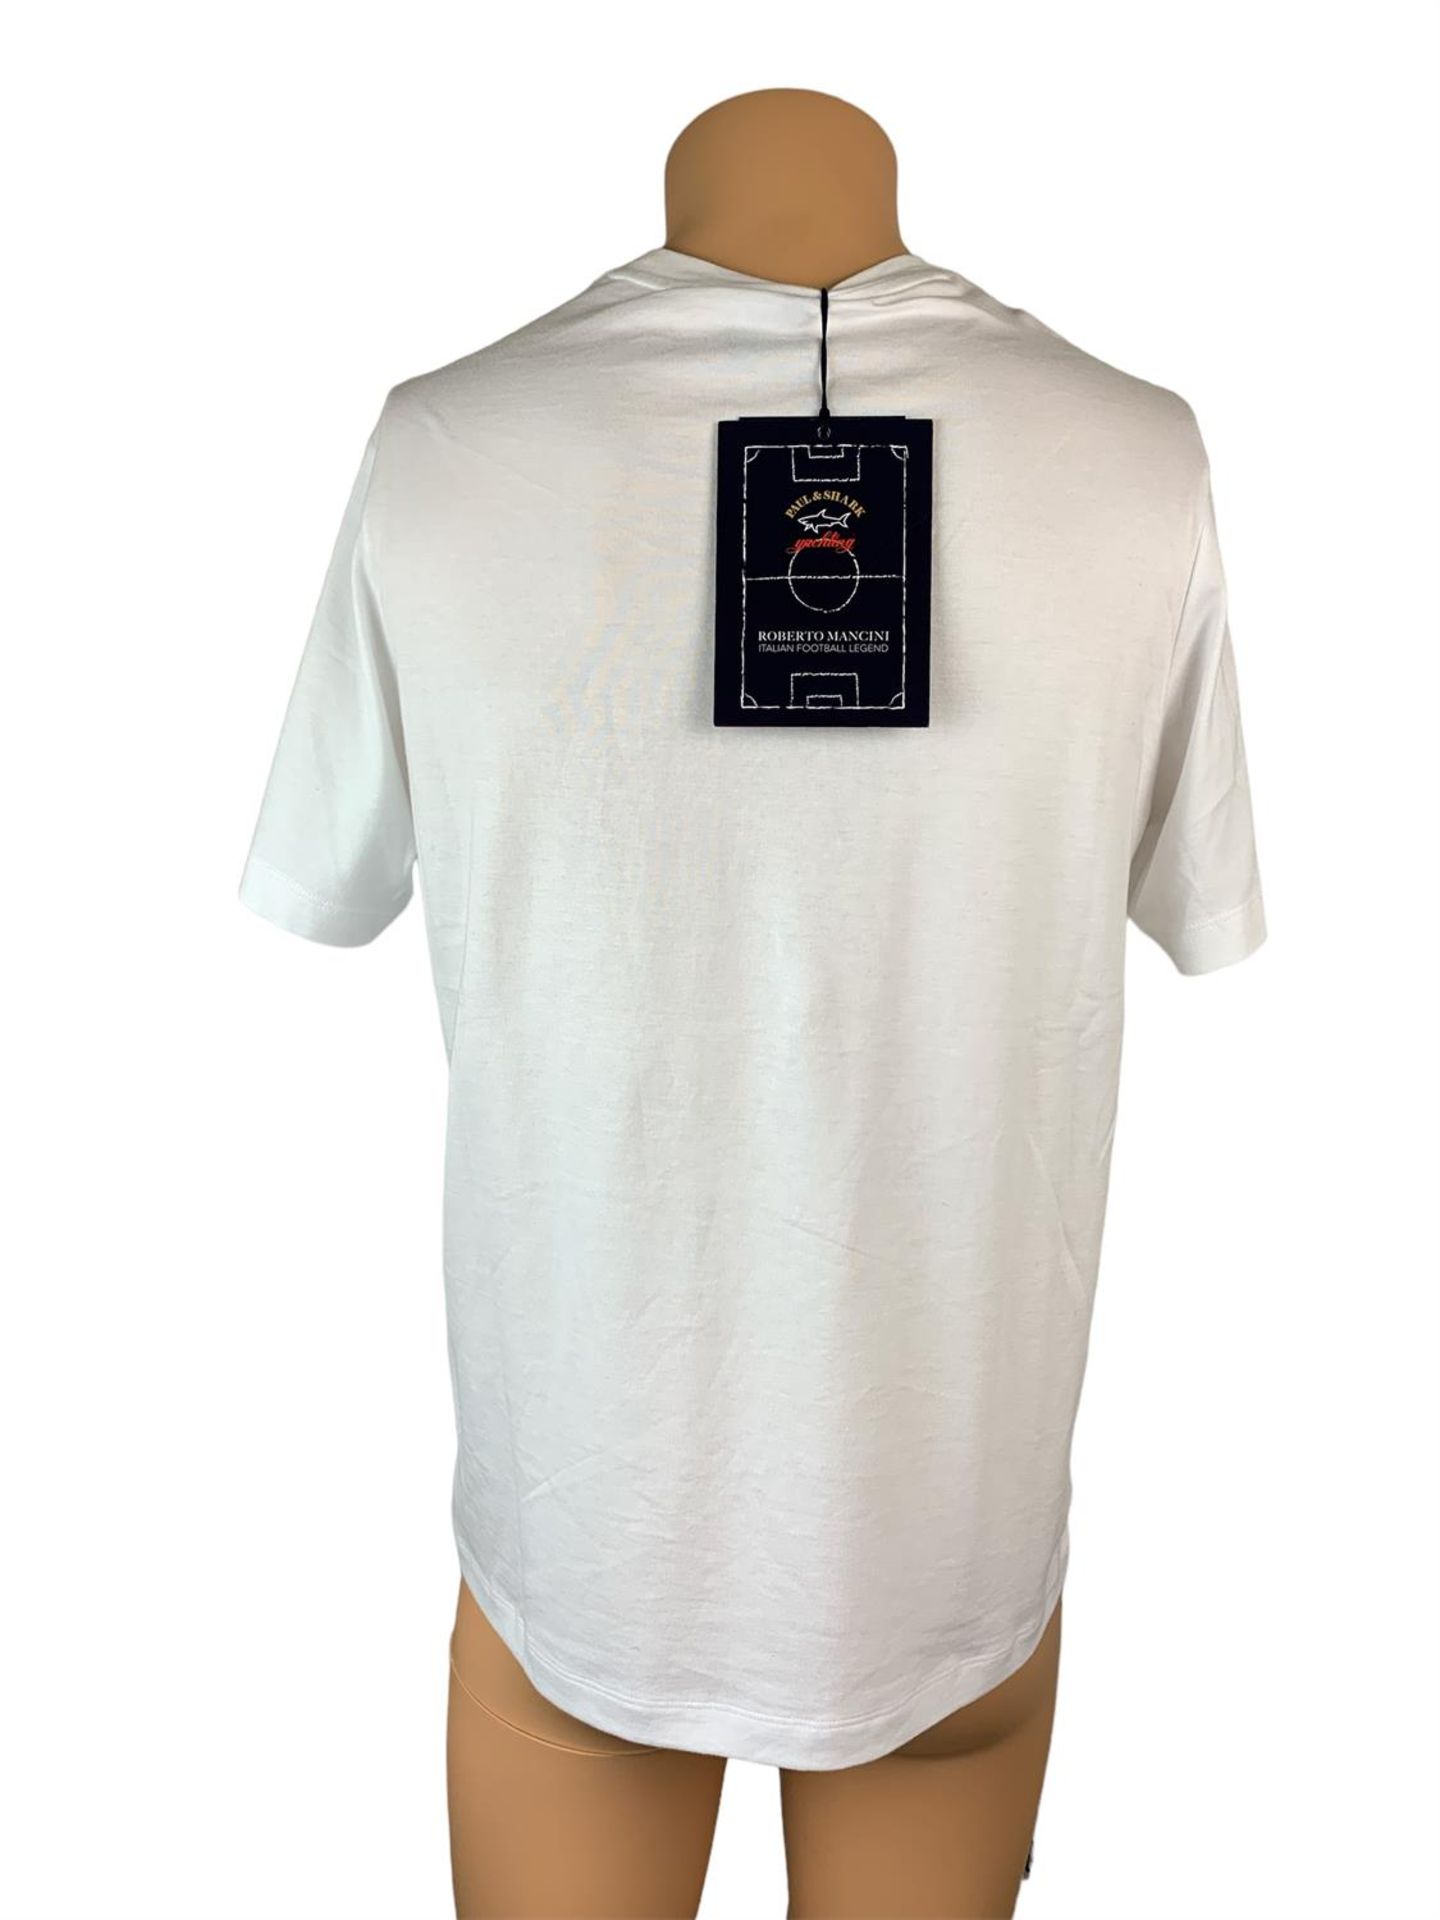 Paul & Shark T-Shirt - Logo On Sleeve - White - Size S - 22411407 - RRP £179 - Image 2 of 2